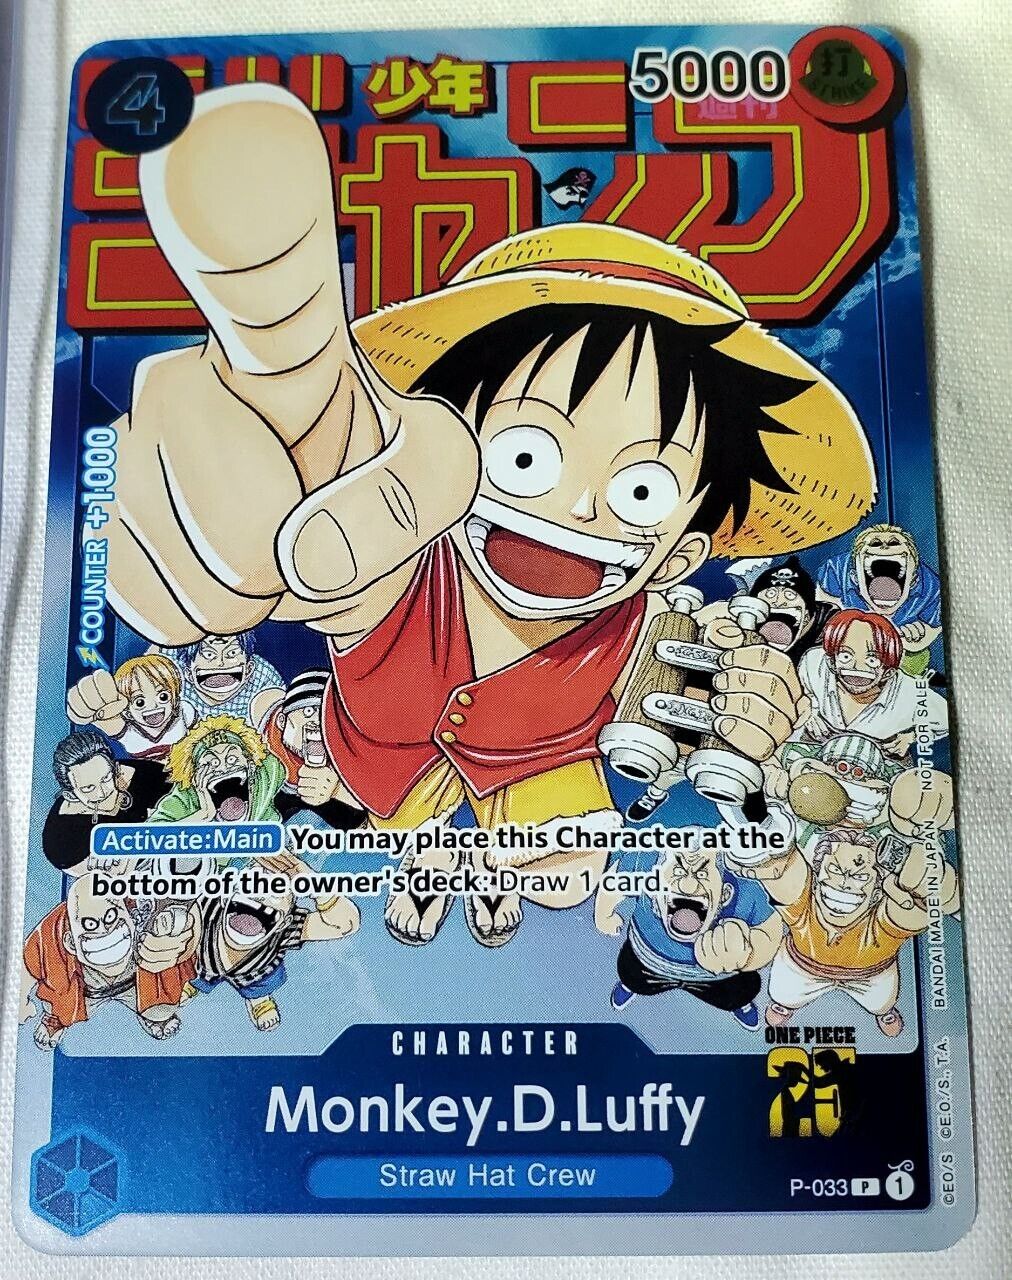 Monkey.D.Luffy (Event Pack Vol. 2) - One Piece Promotion Cards (OP-PR)- Mint -